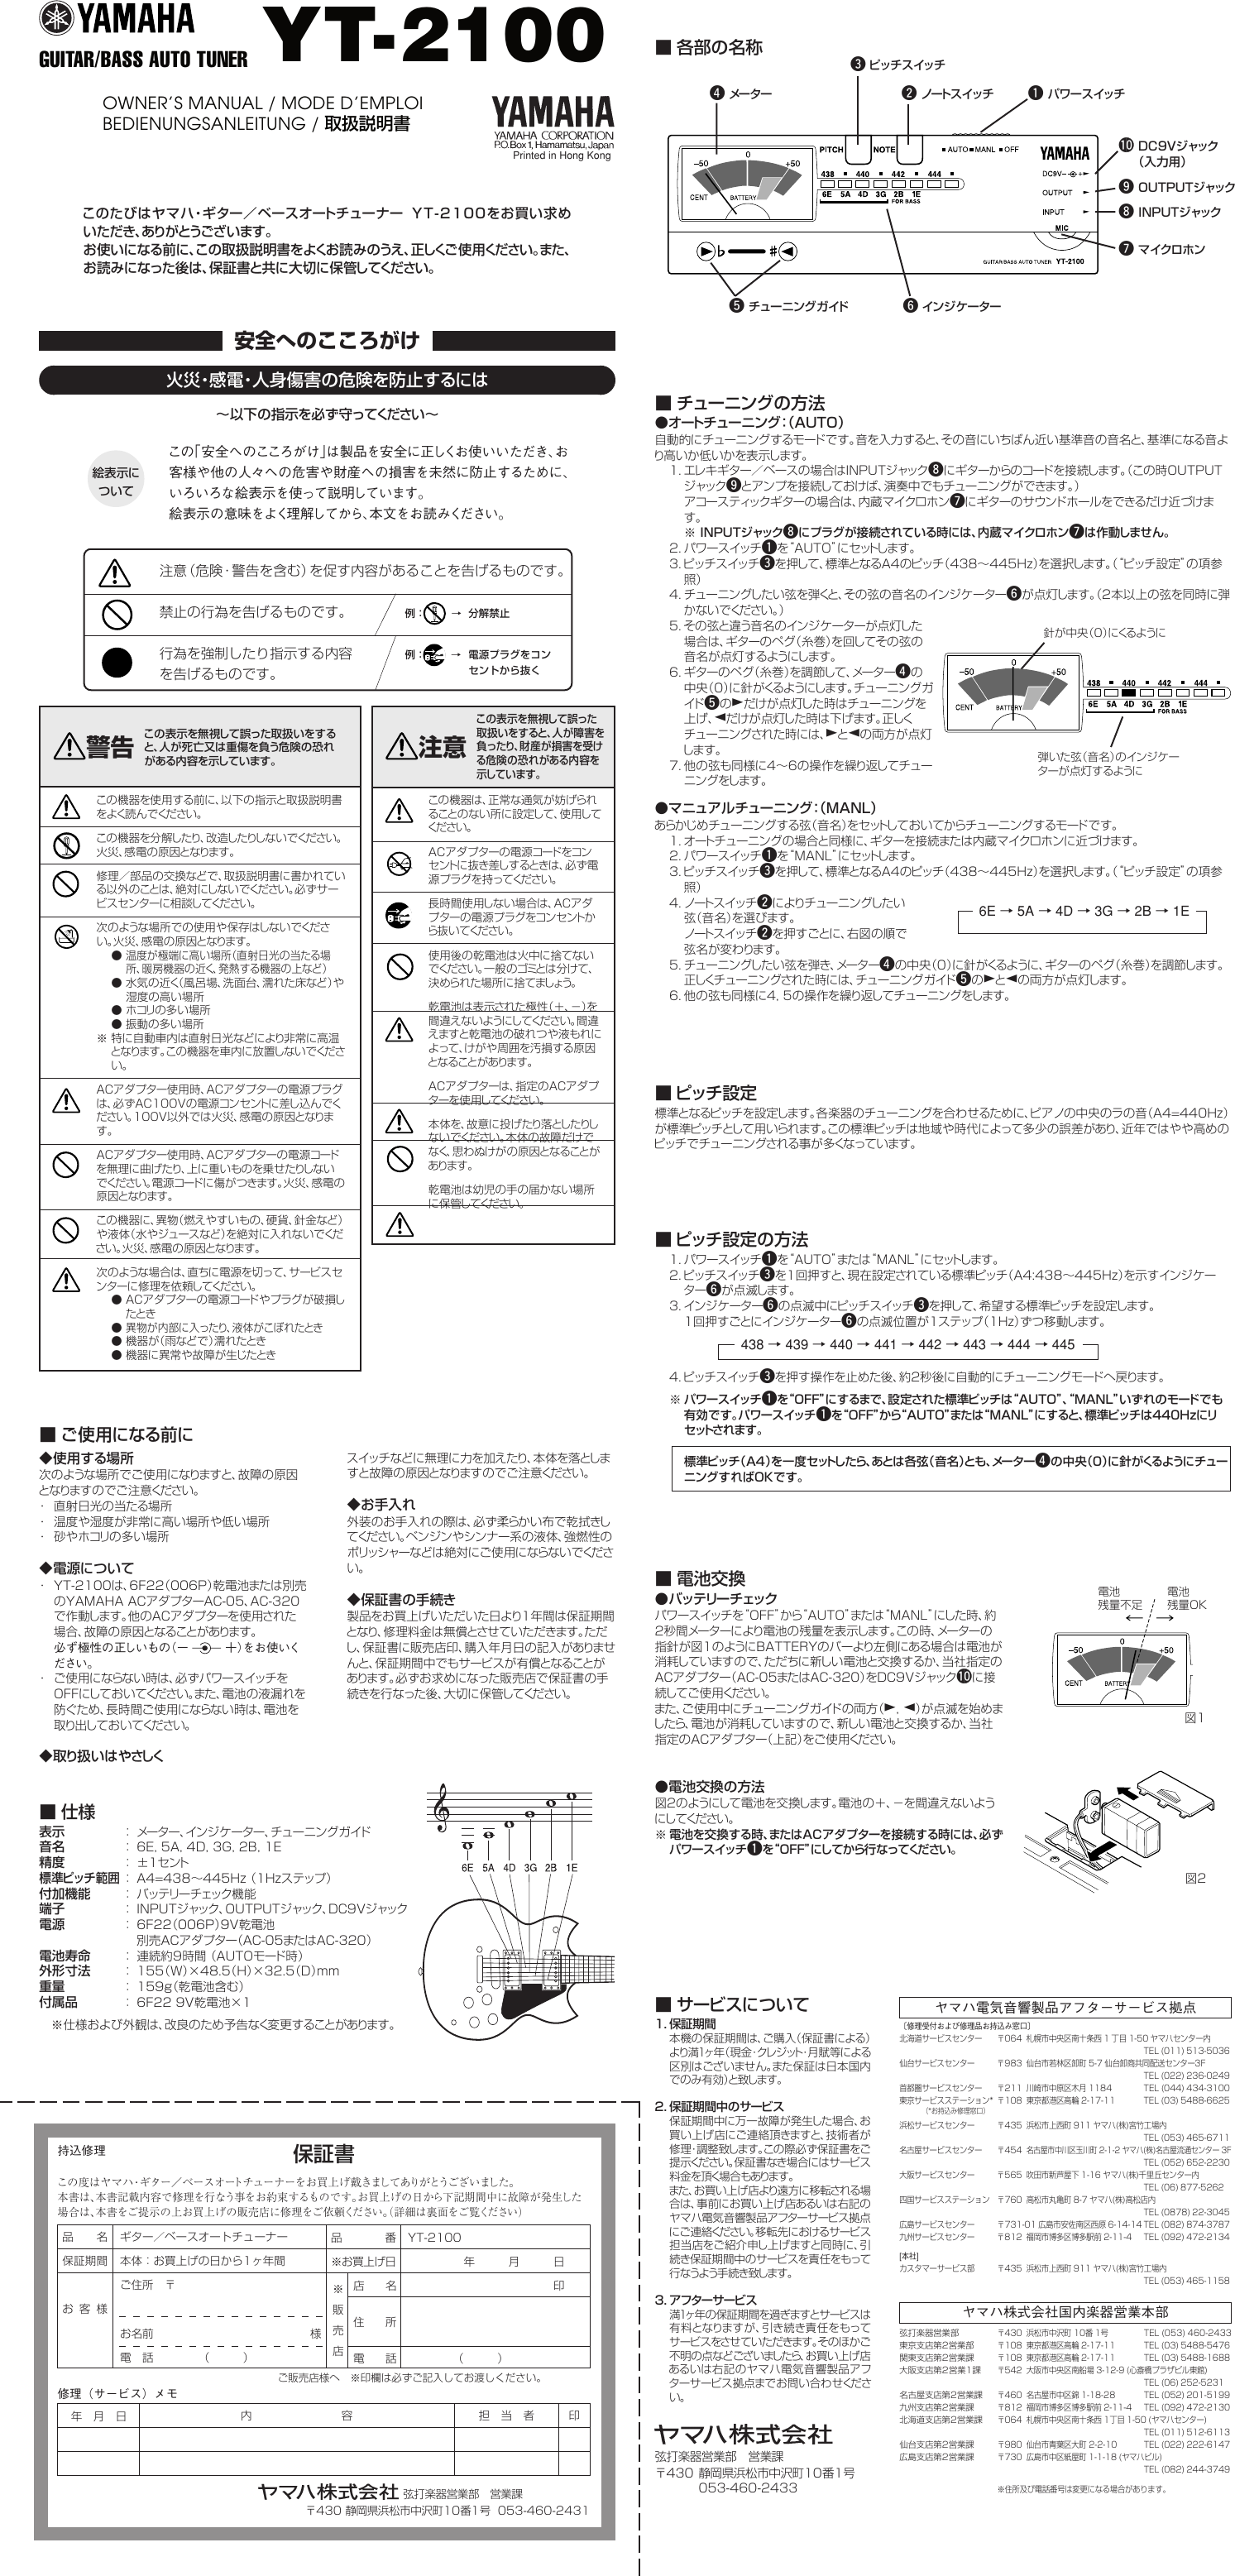 Yamaha Yt 2100 Users Manual